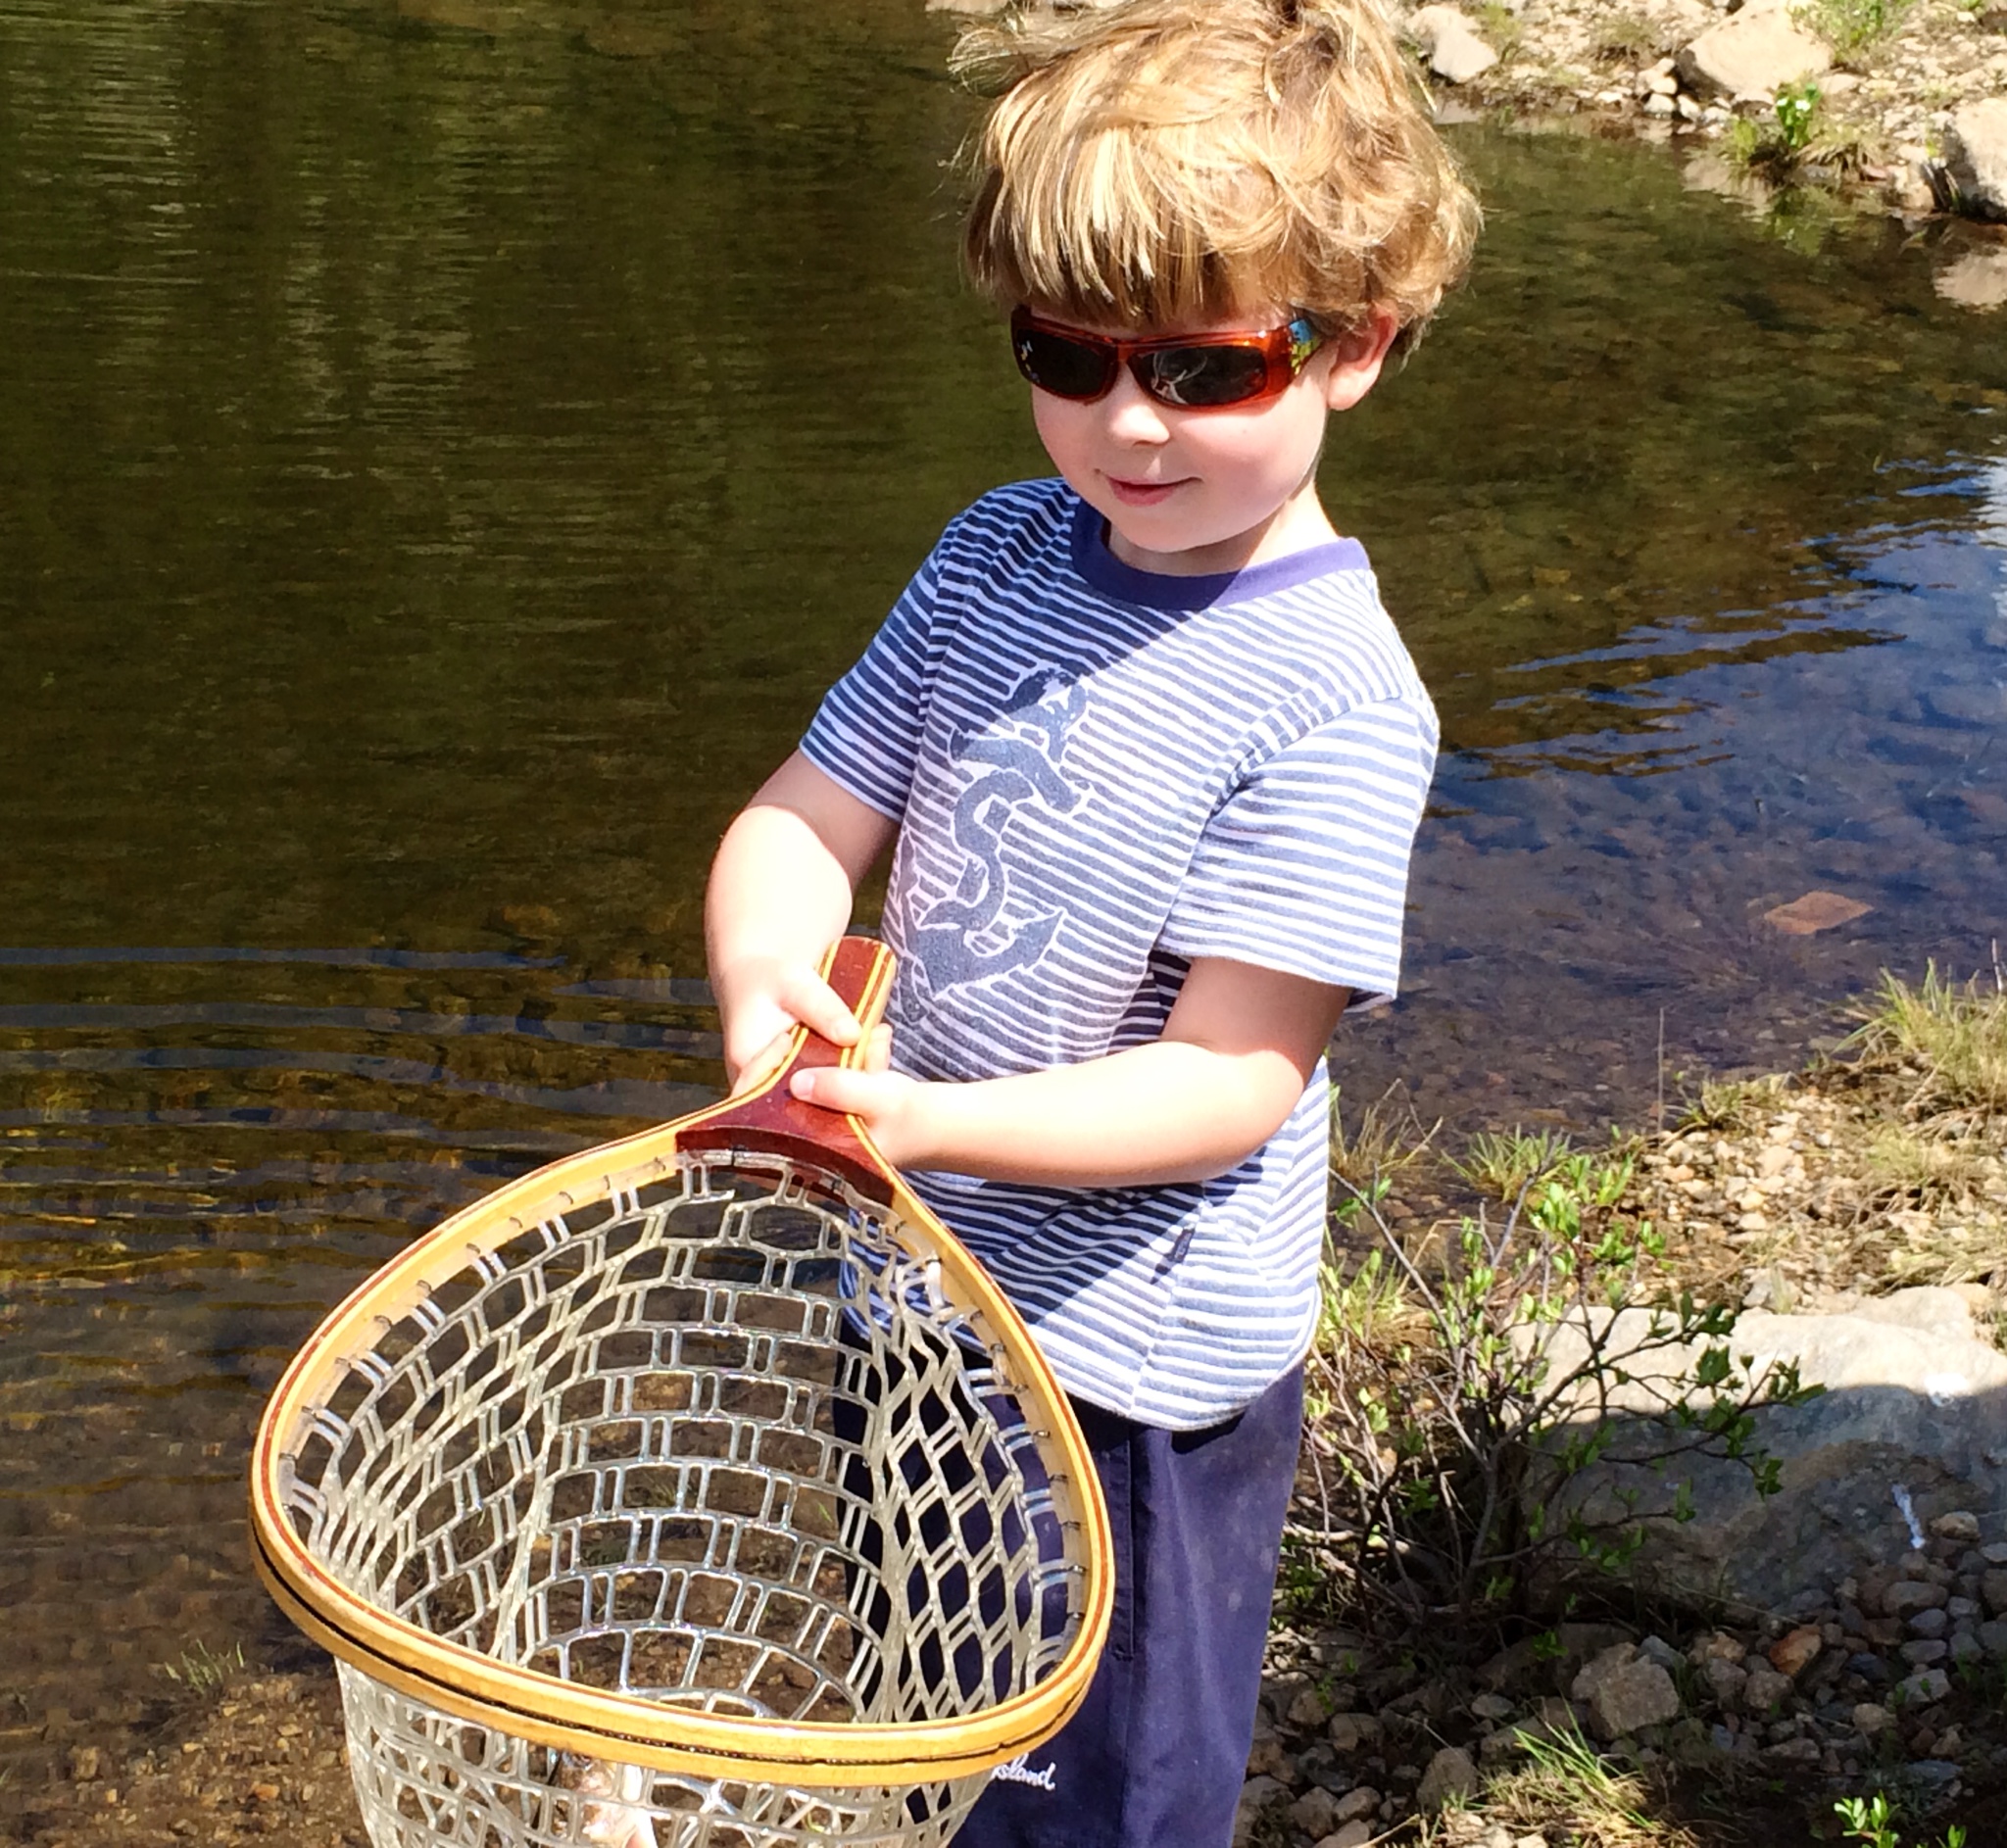 smallwood boy fishing with net